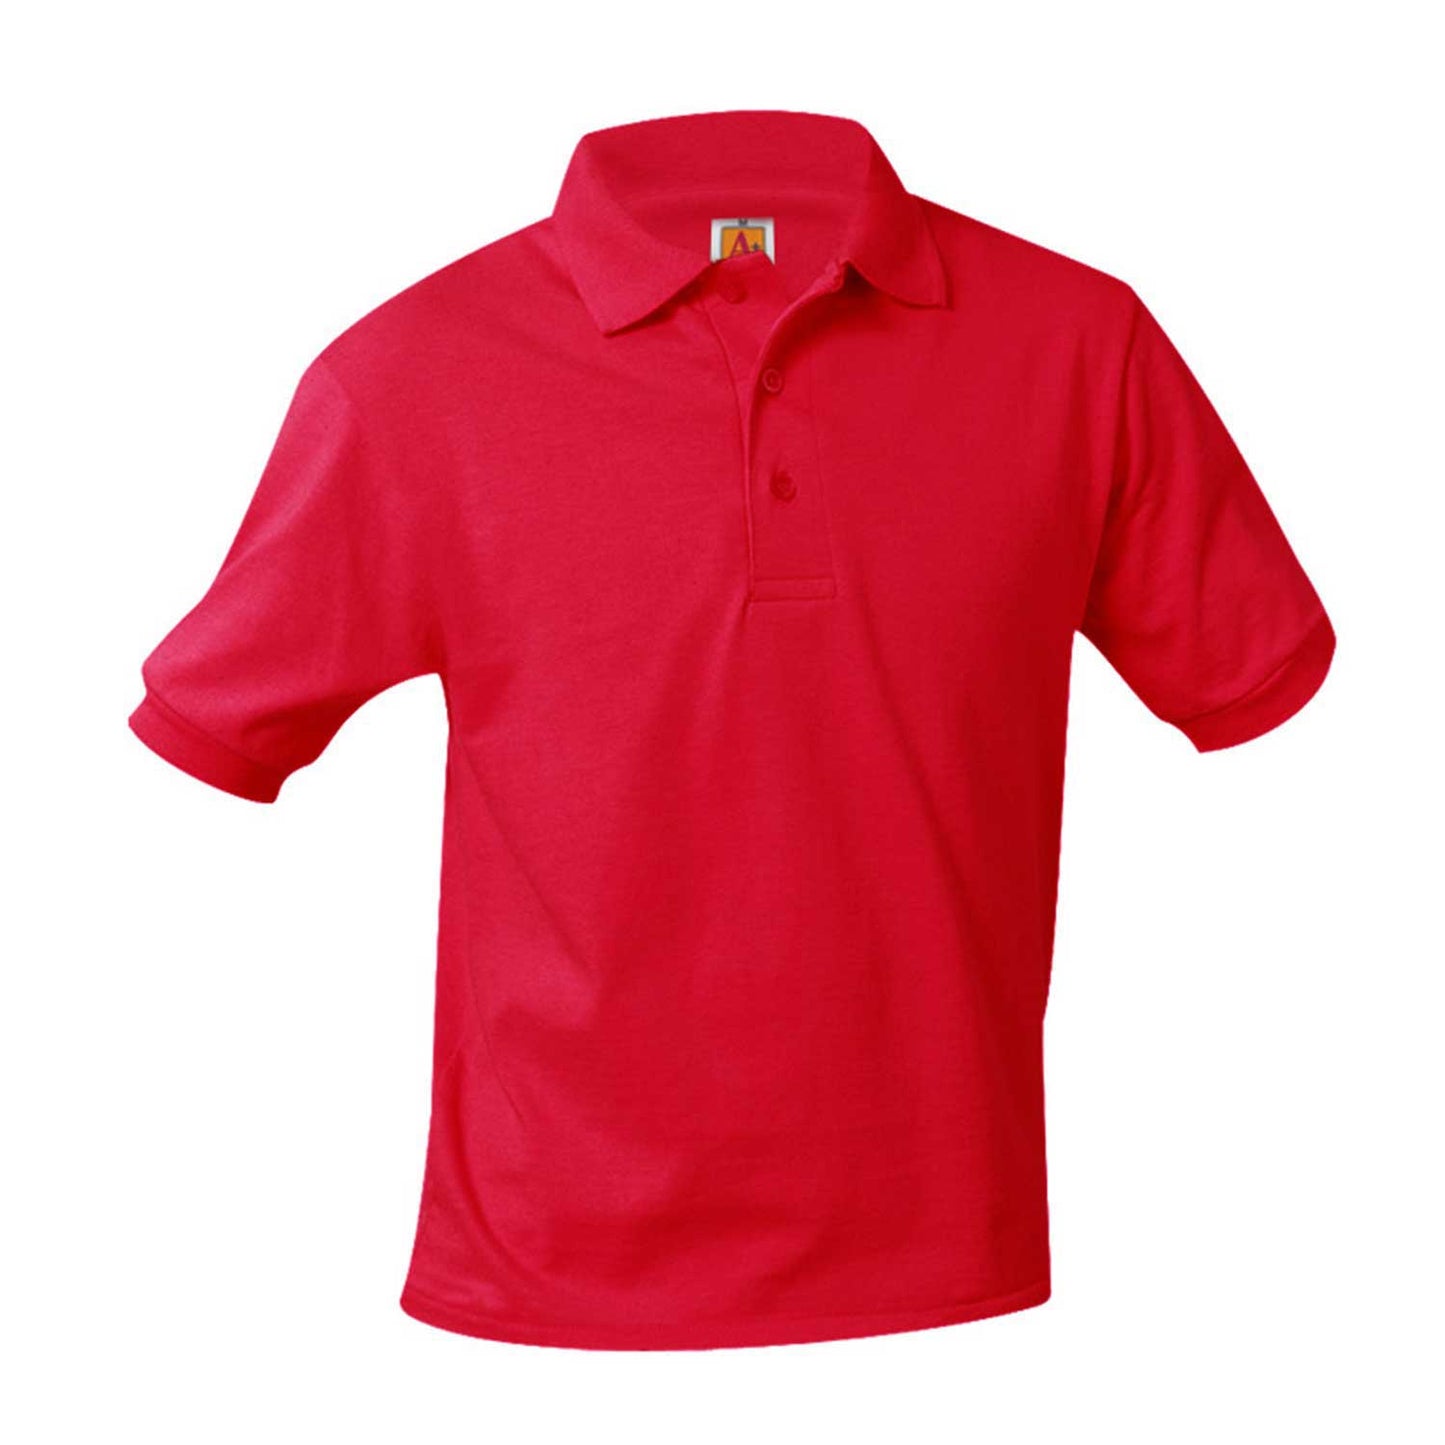 Standifer Gap Unisex Smooth Knit Polo Shirt